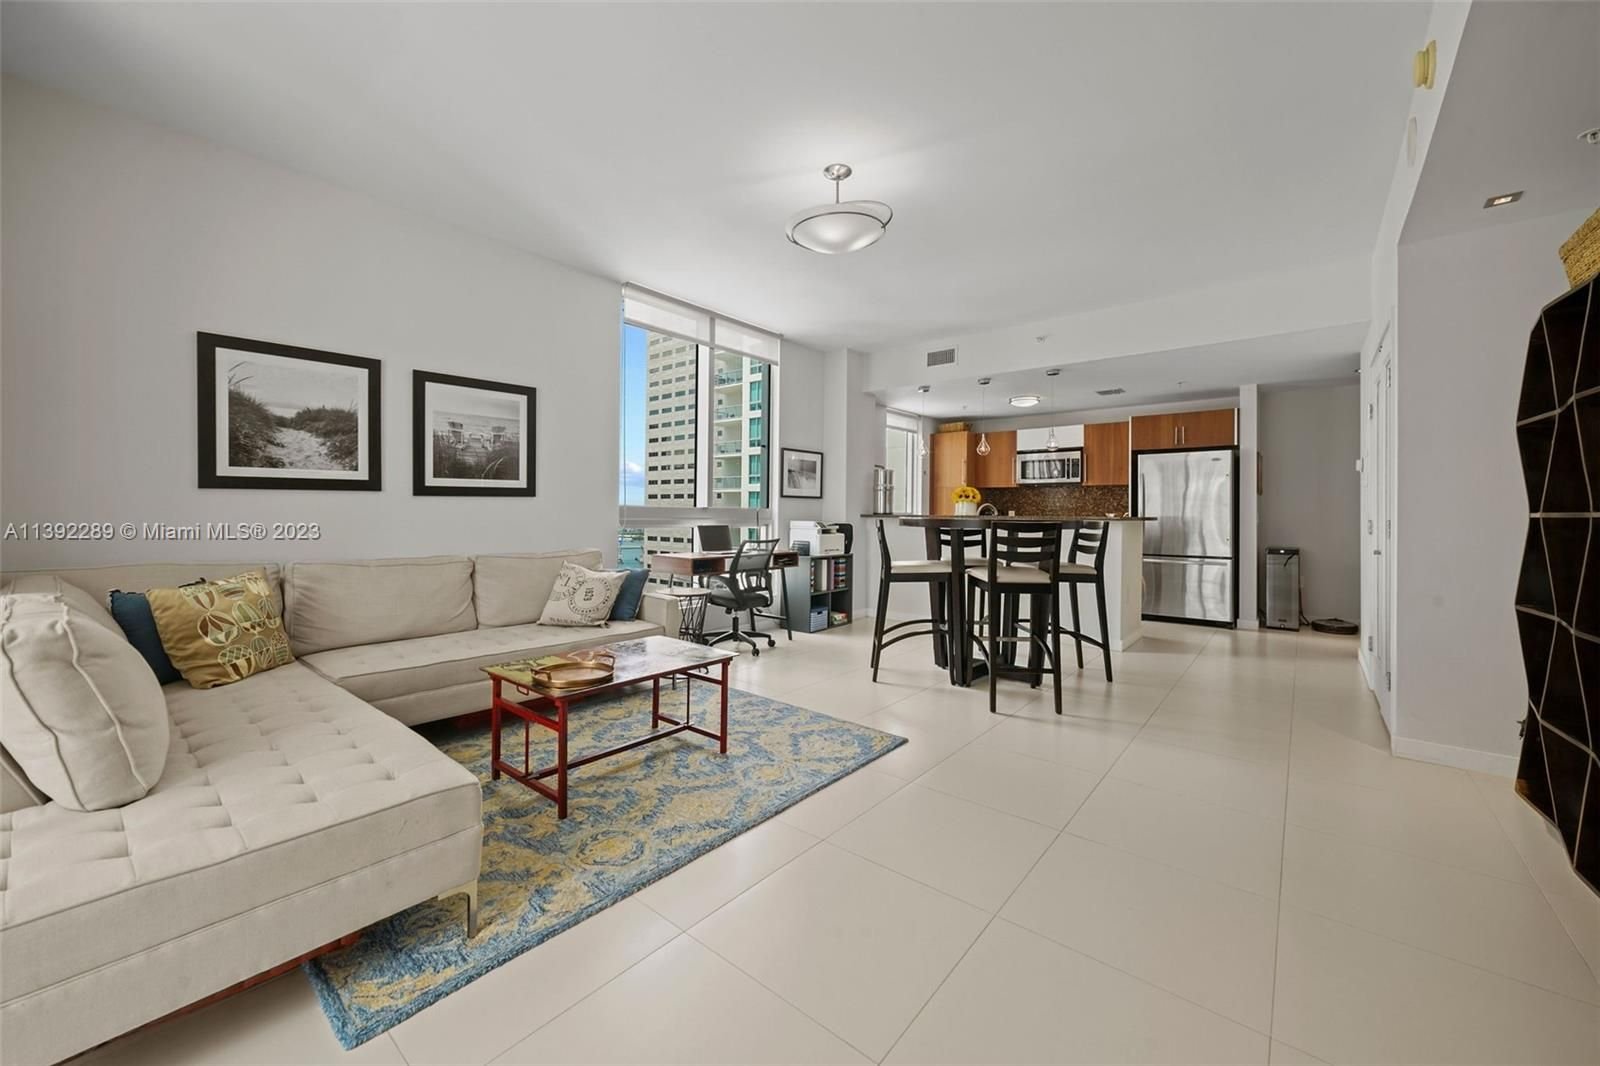 Real estate property located at 300 Biscayne Blvd T-2501, Miami-Dade County, Miami, FL